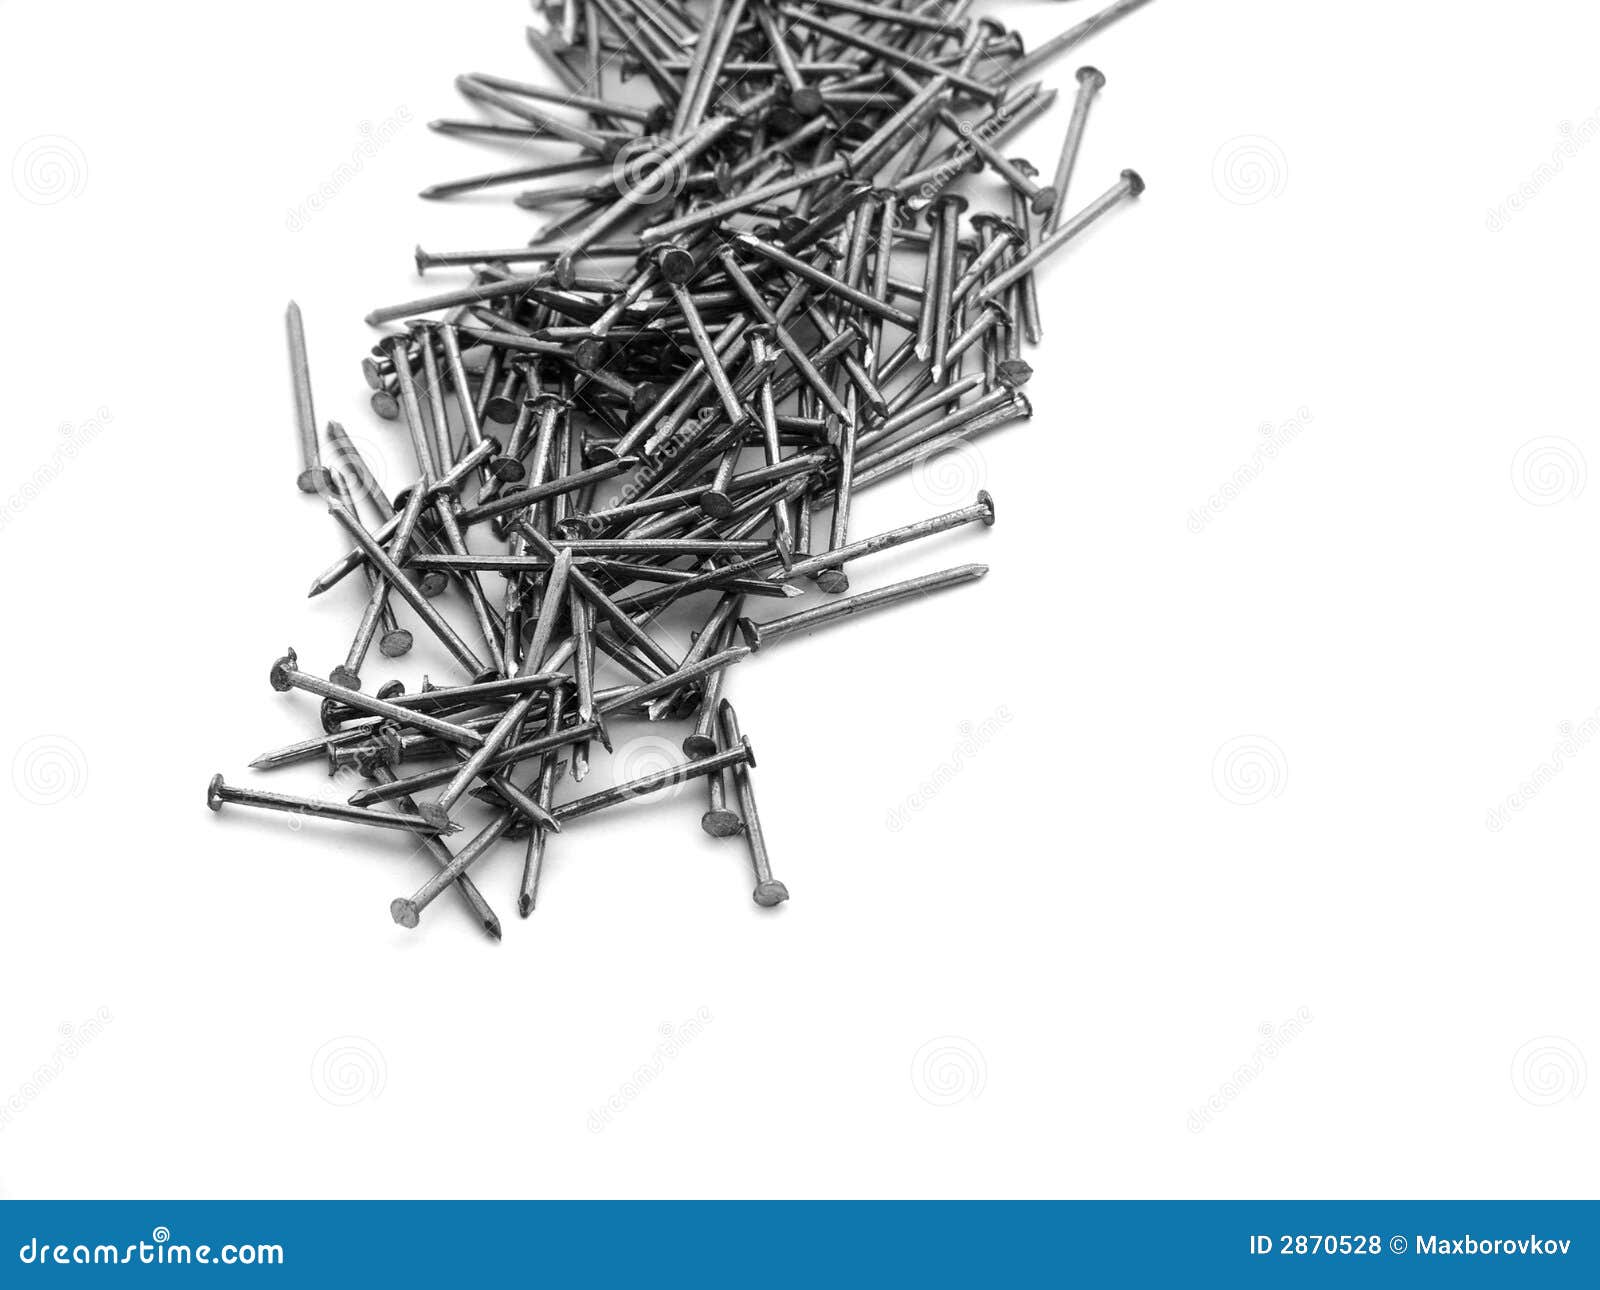 Pile Of Nails On White Isolated Background Royalty-Free Stock Image ...